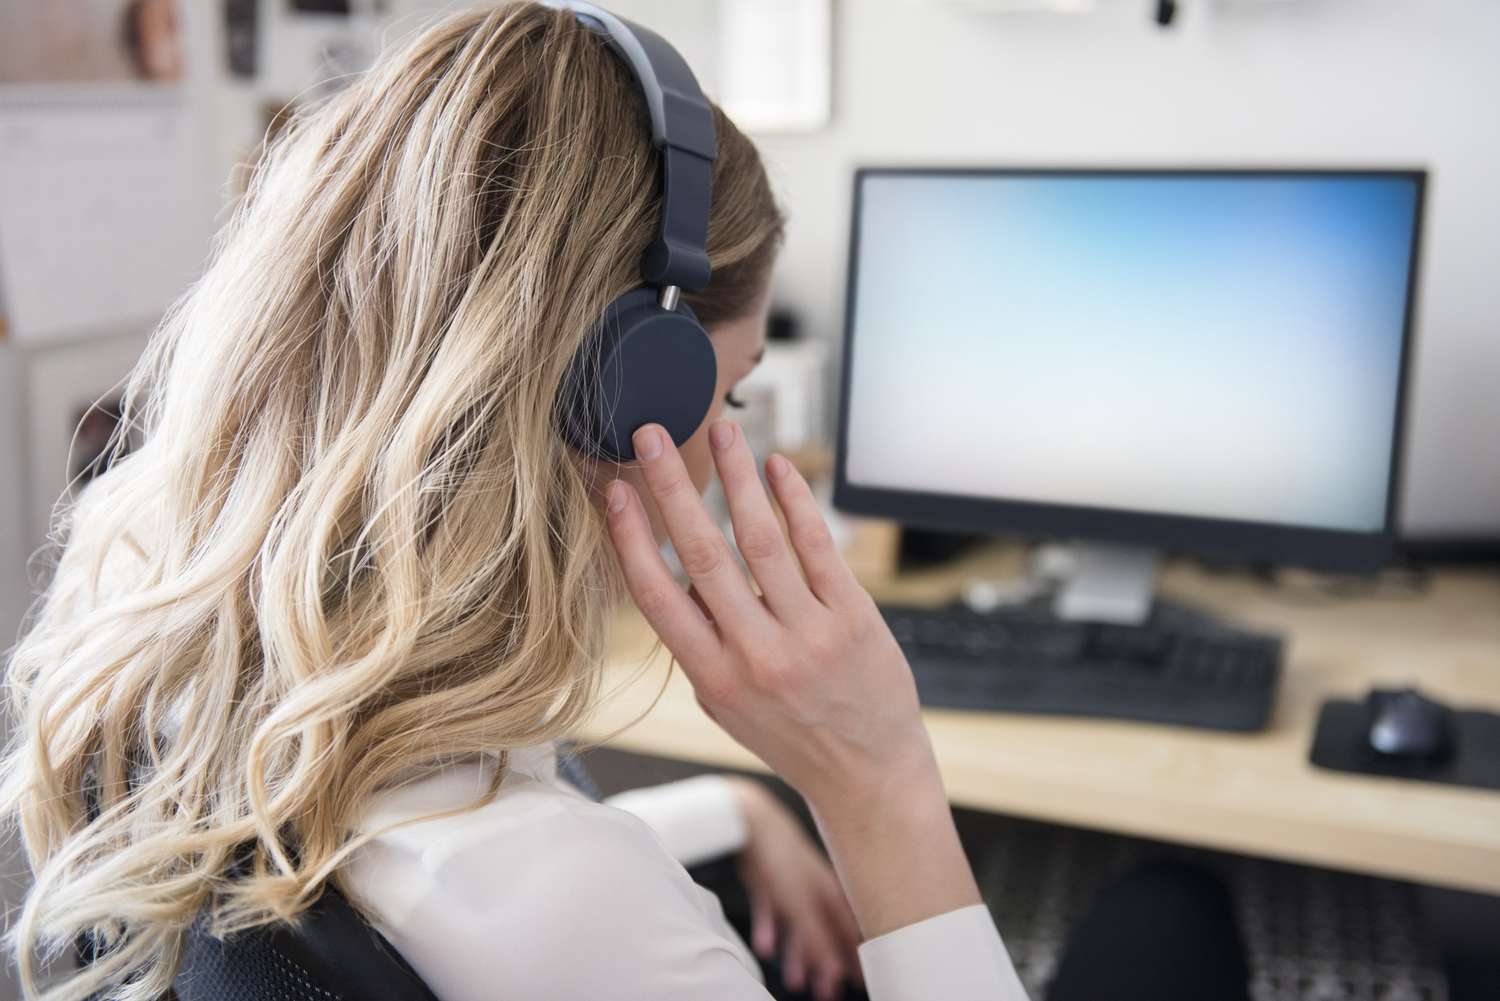 caucasian woman listening to headphones at computer desk 758282915 5c9019ee46e0fb00015558f5